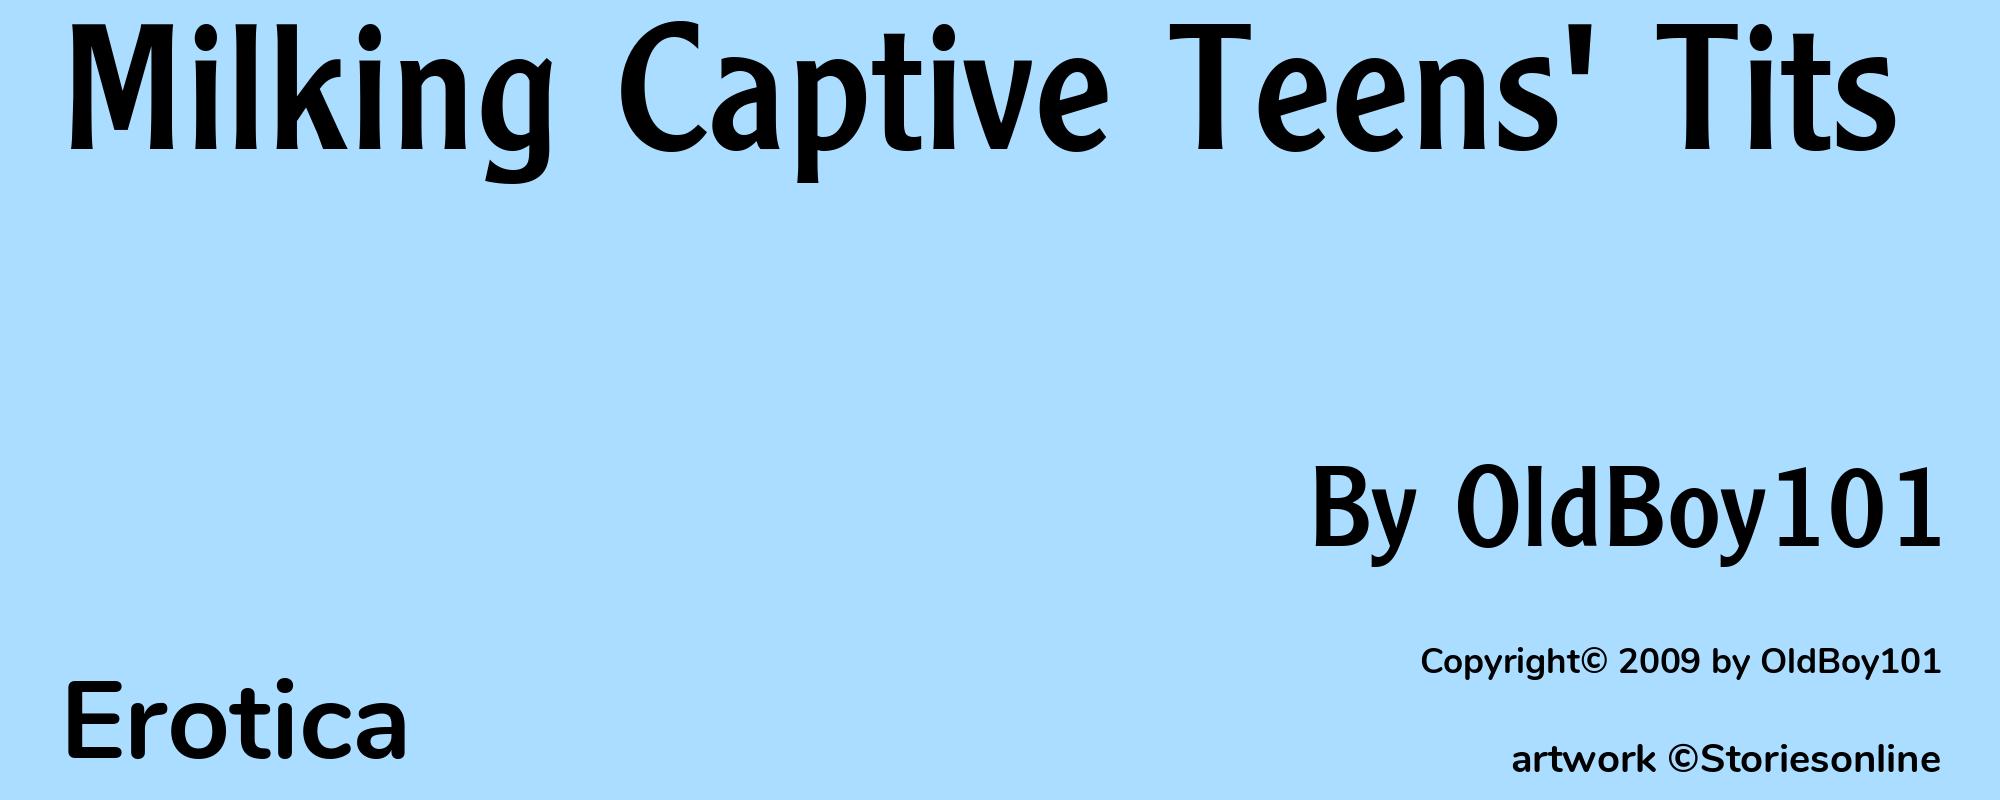 Milking Captive Teens' Tits - Cover